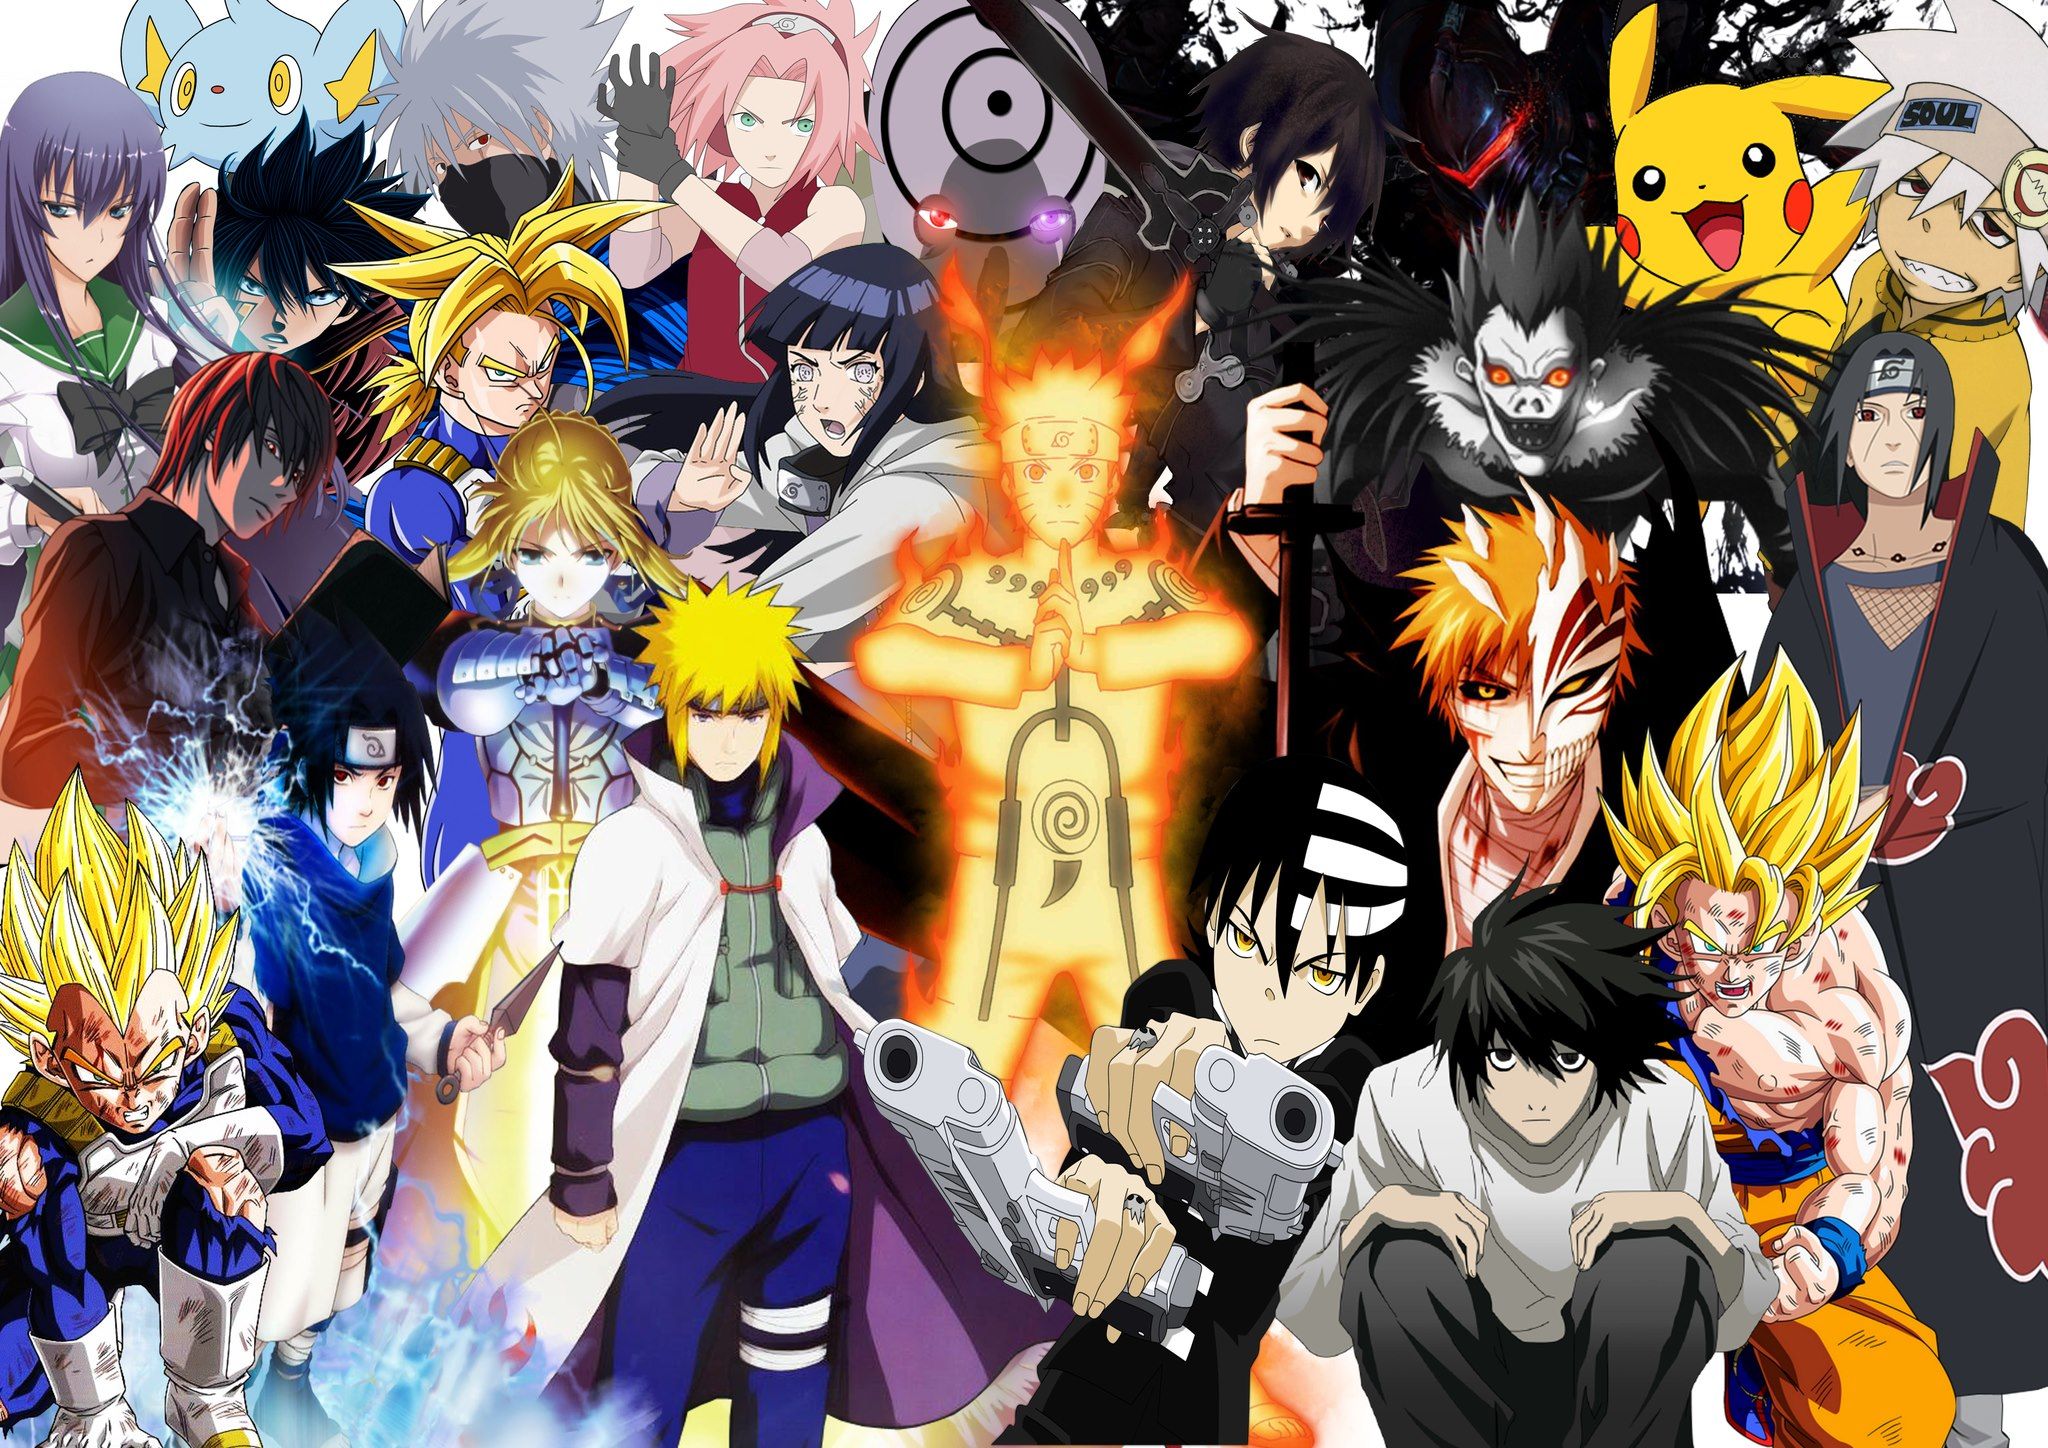 210 Ideias De Wallpaper Em 2021 Animes Wallpapers Personagens Images